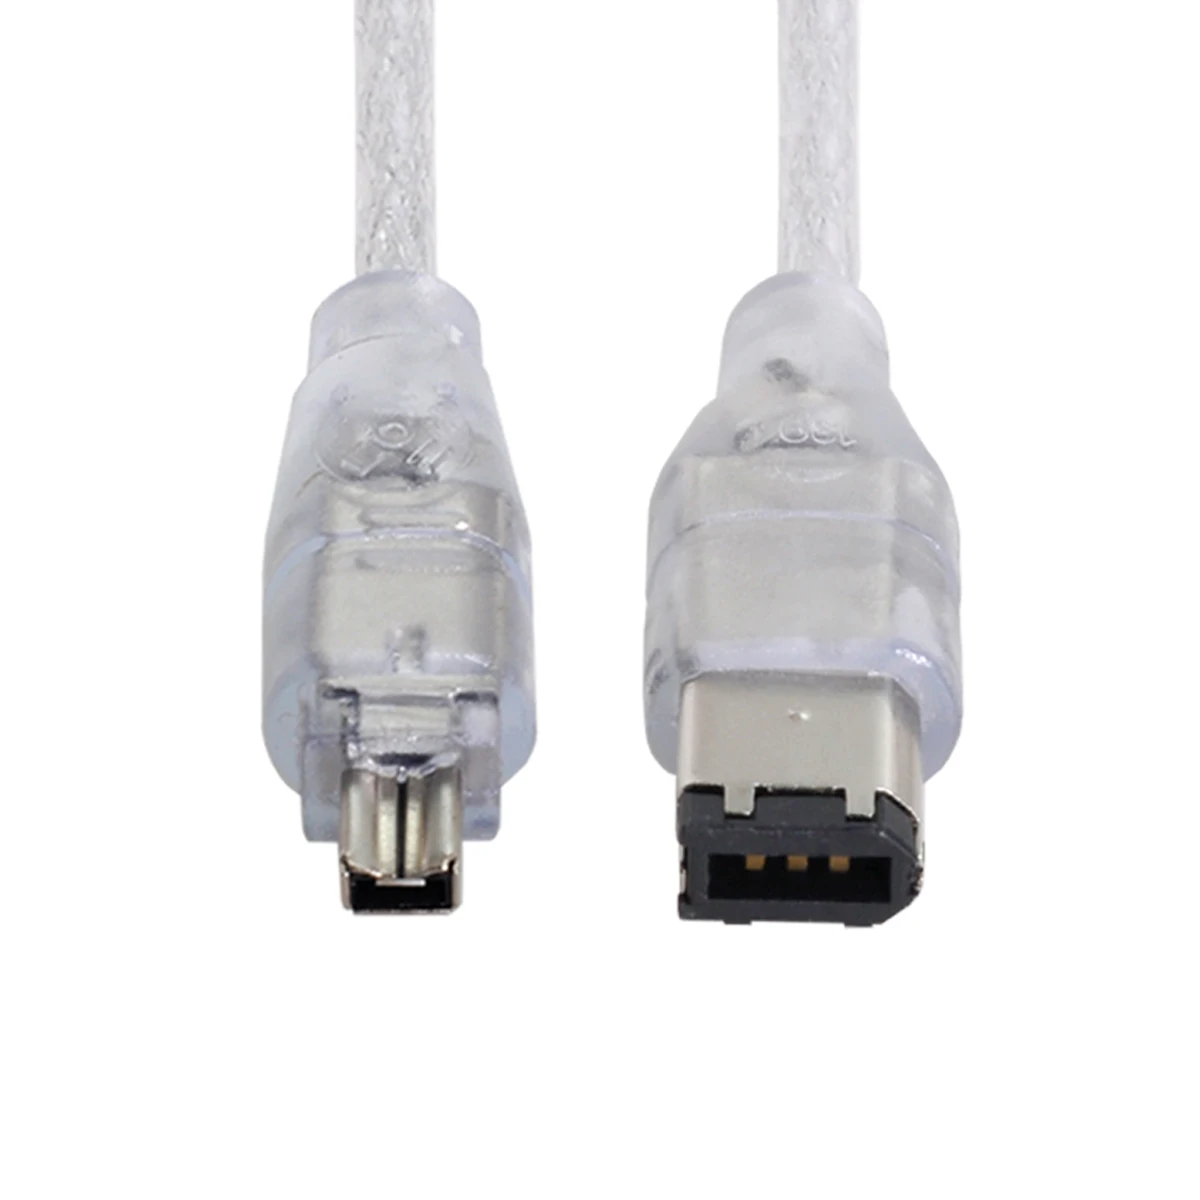 

Cablecc 1394 6Pin к Firewire 400 IEEE 1394 4-контактный штекер iLink адаптер кабель